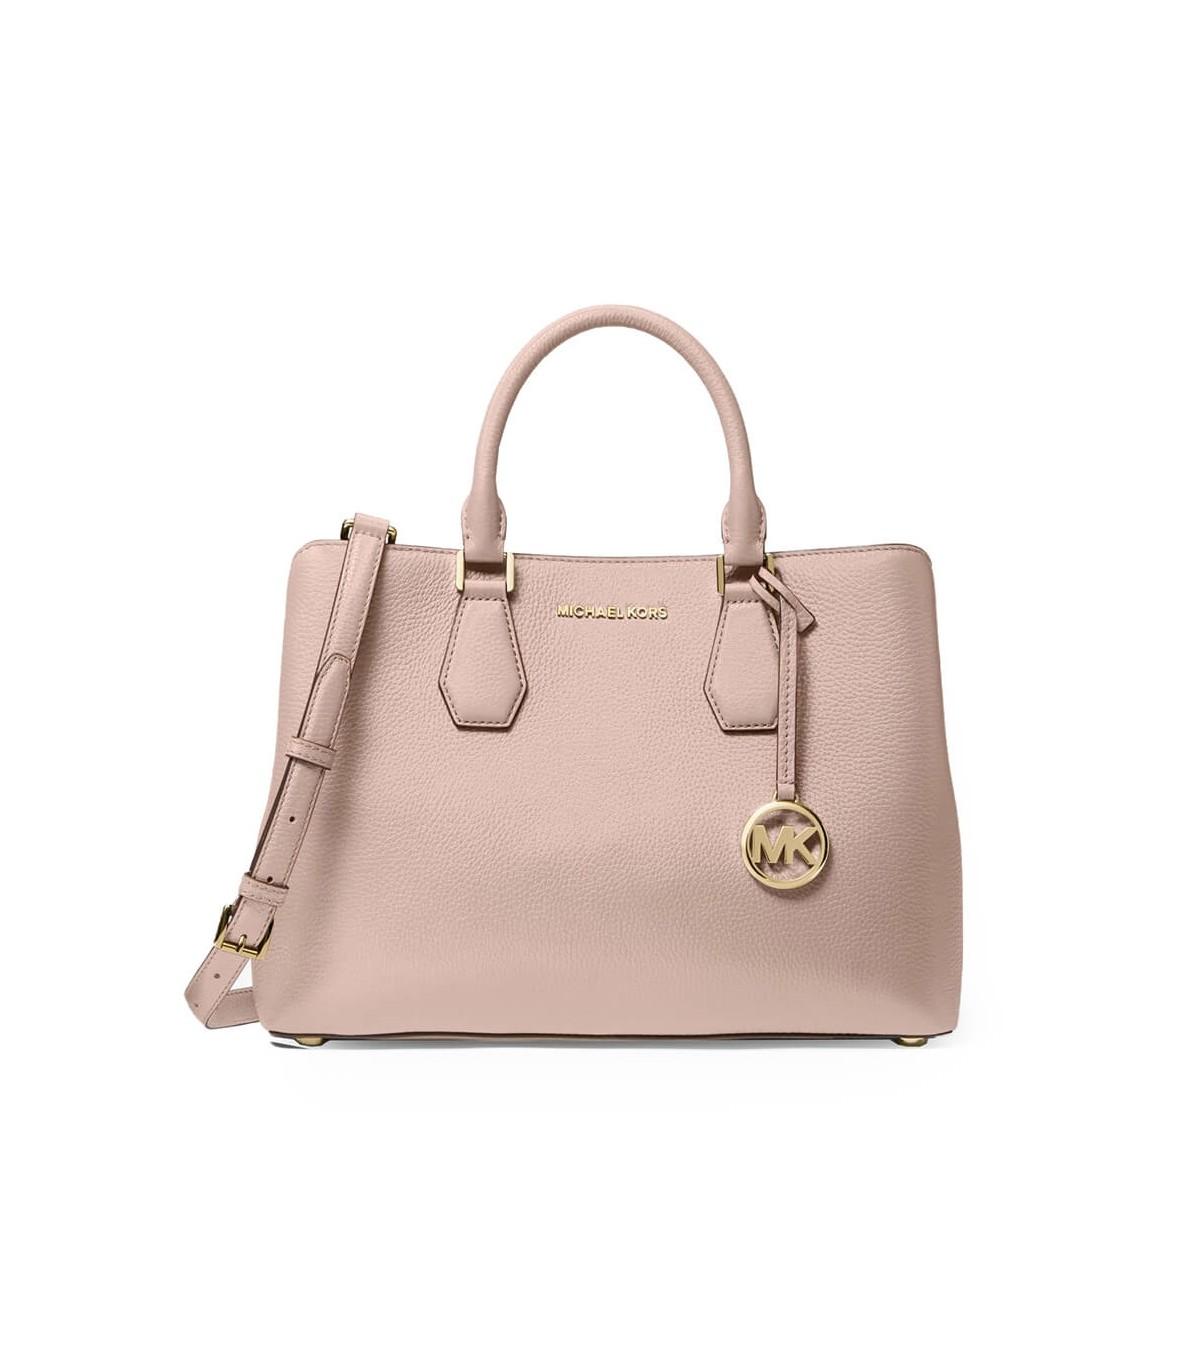 Michael Kors Camille Soft Pink Handbag | Lyst